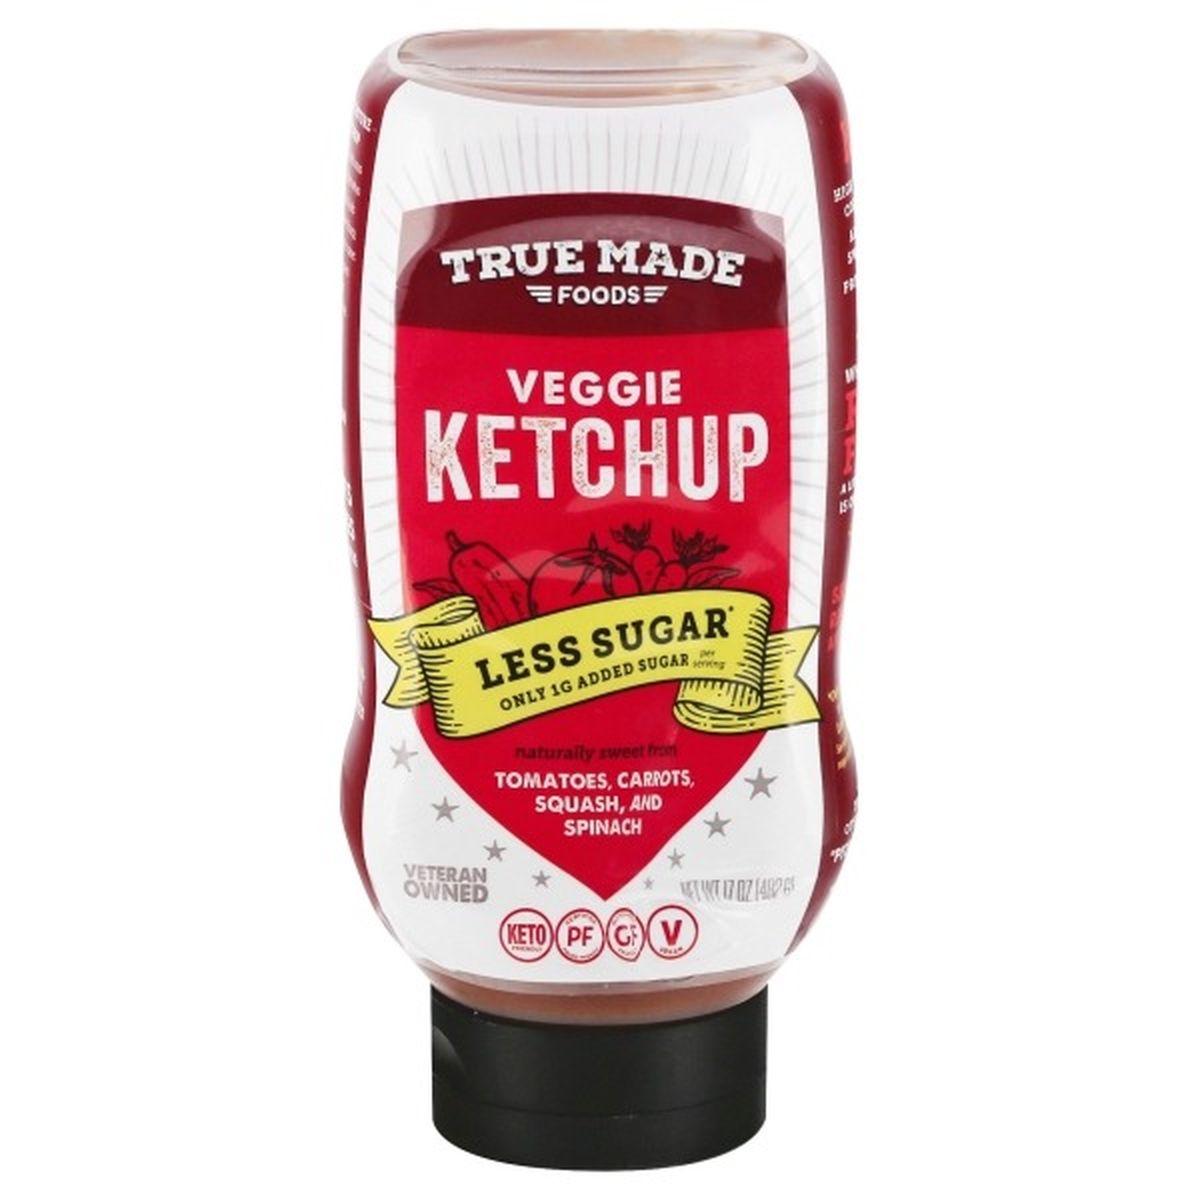 Calories in True Made Foods Veggie Ketchup